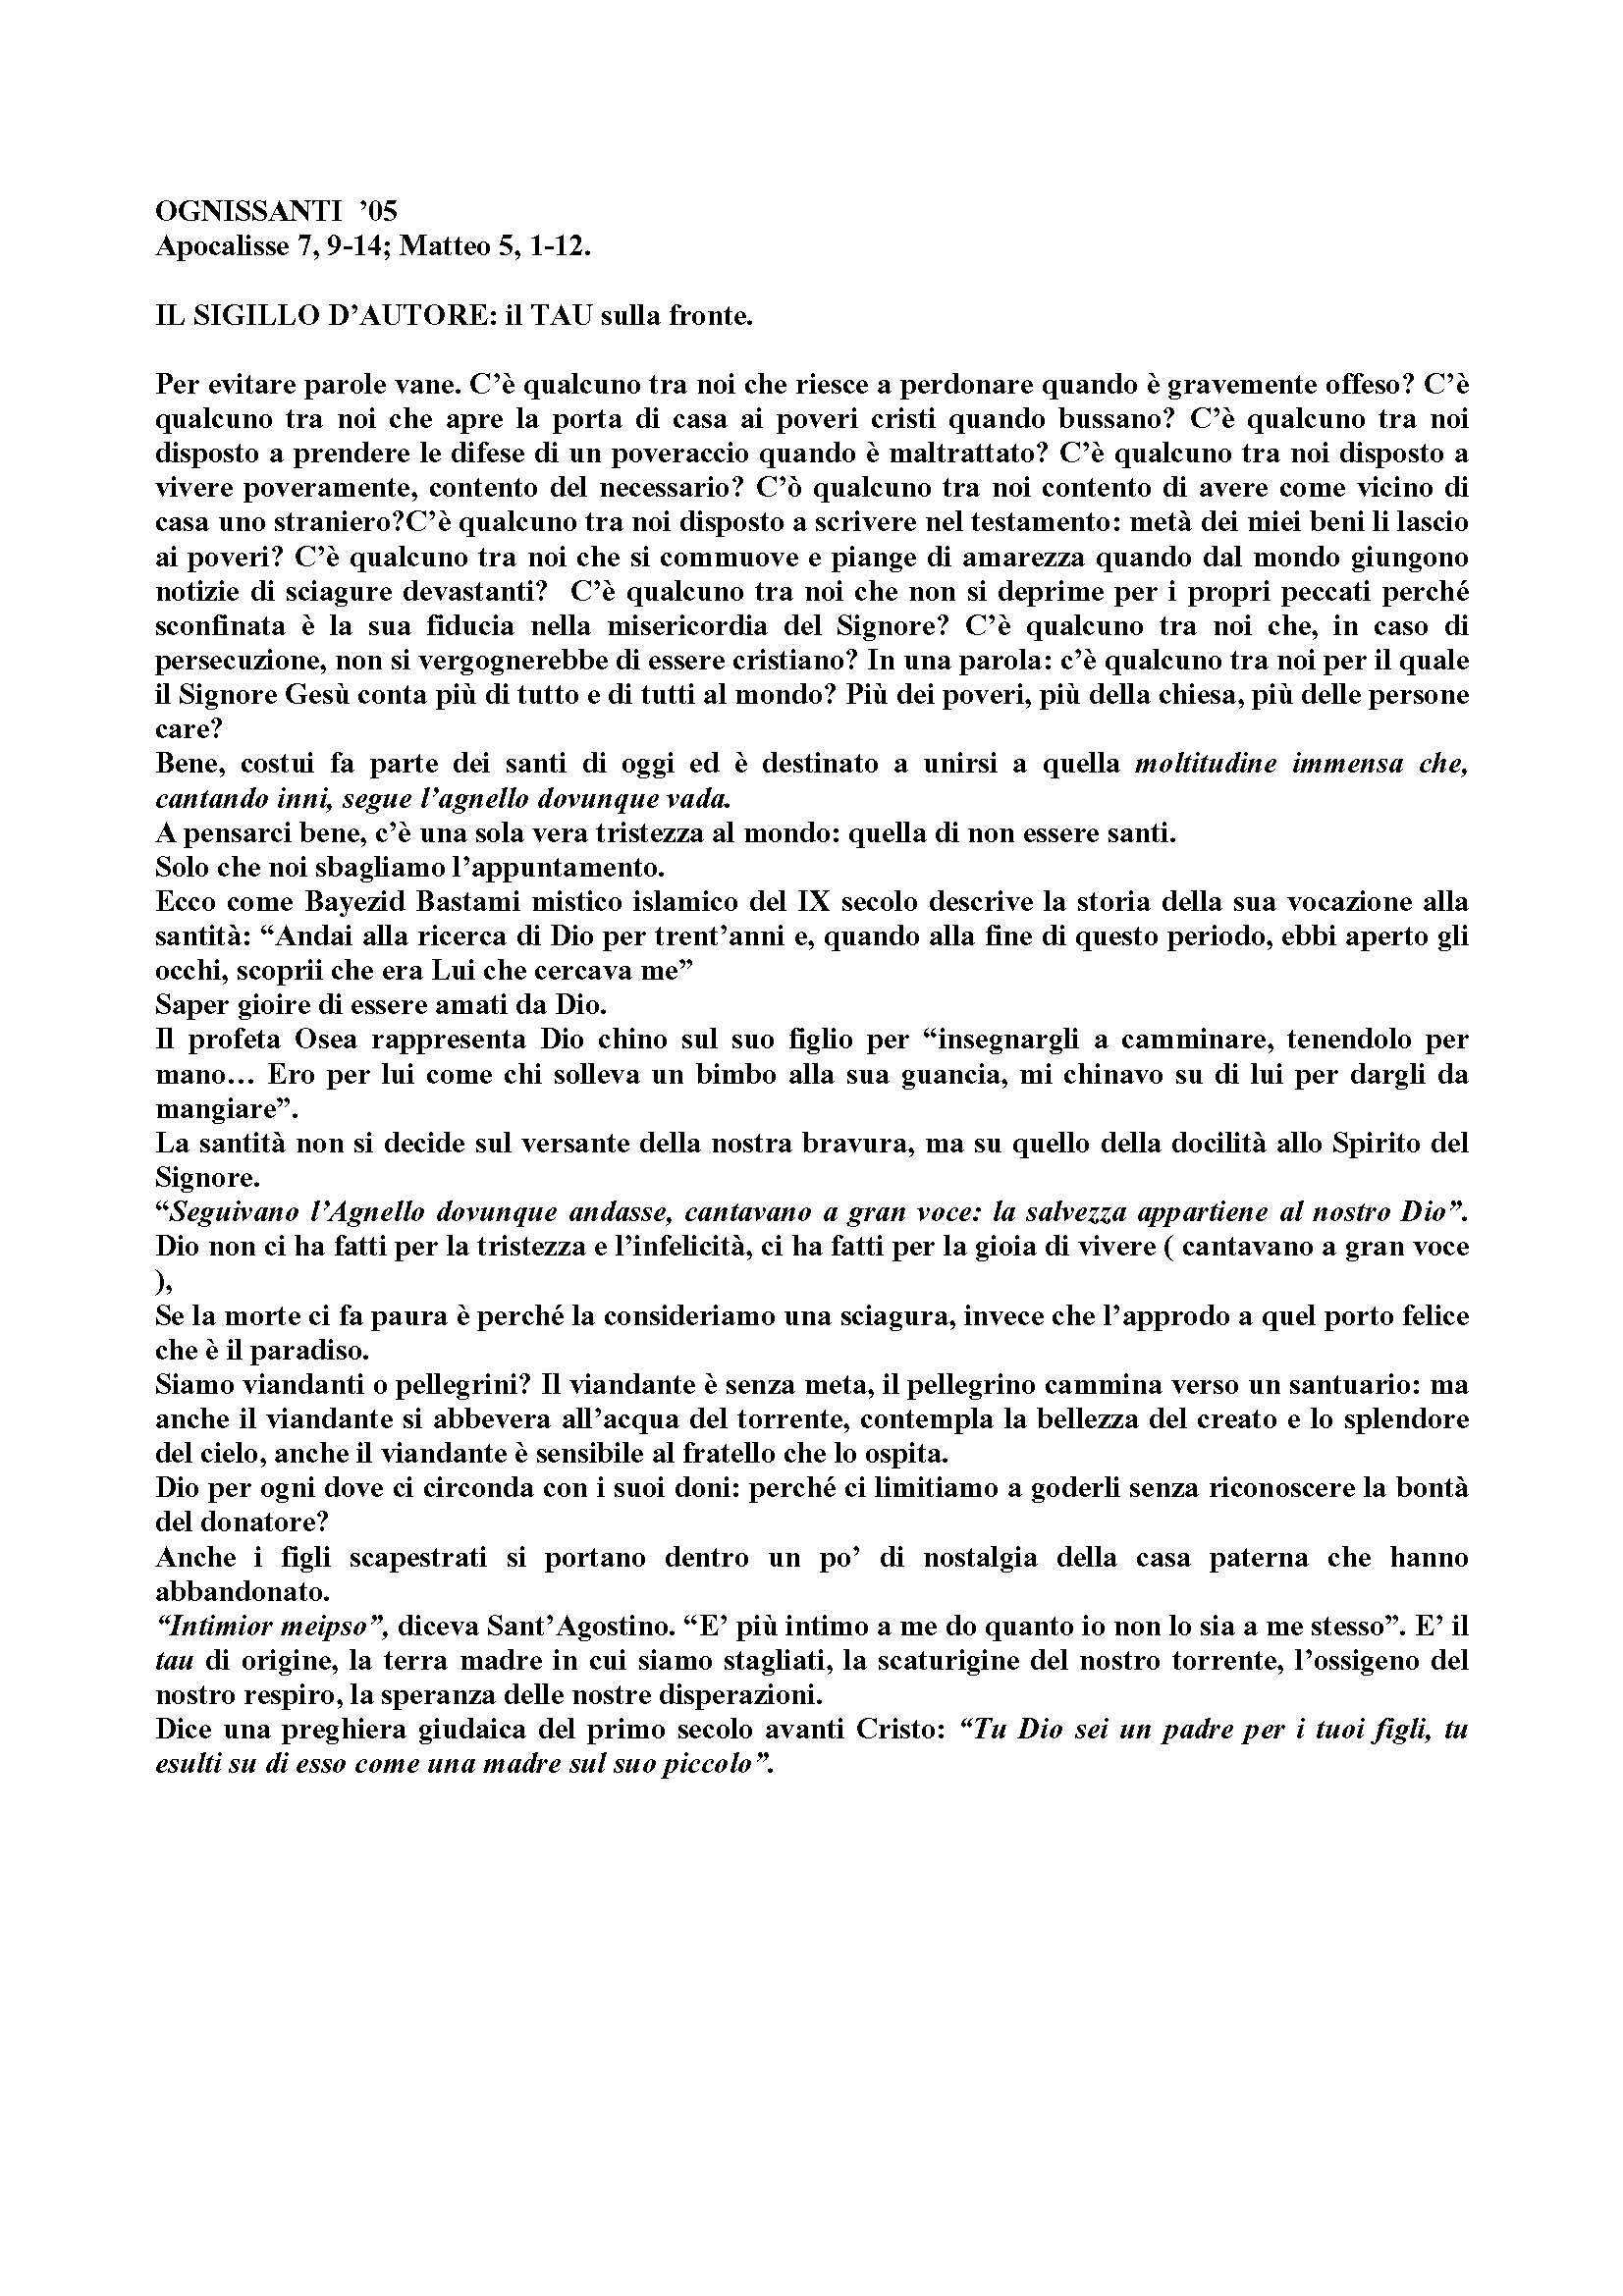 OGNISSANTI_05_Apocalisse_Matteo_SIGILLO_AUTORE.pdf